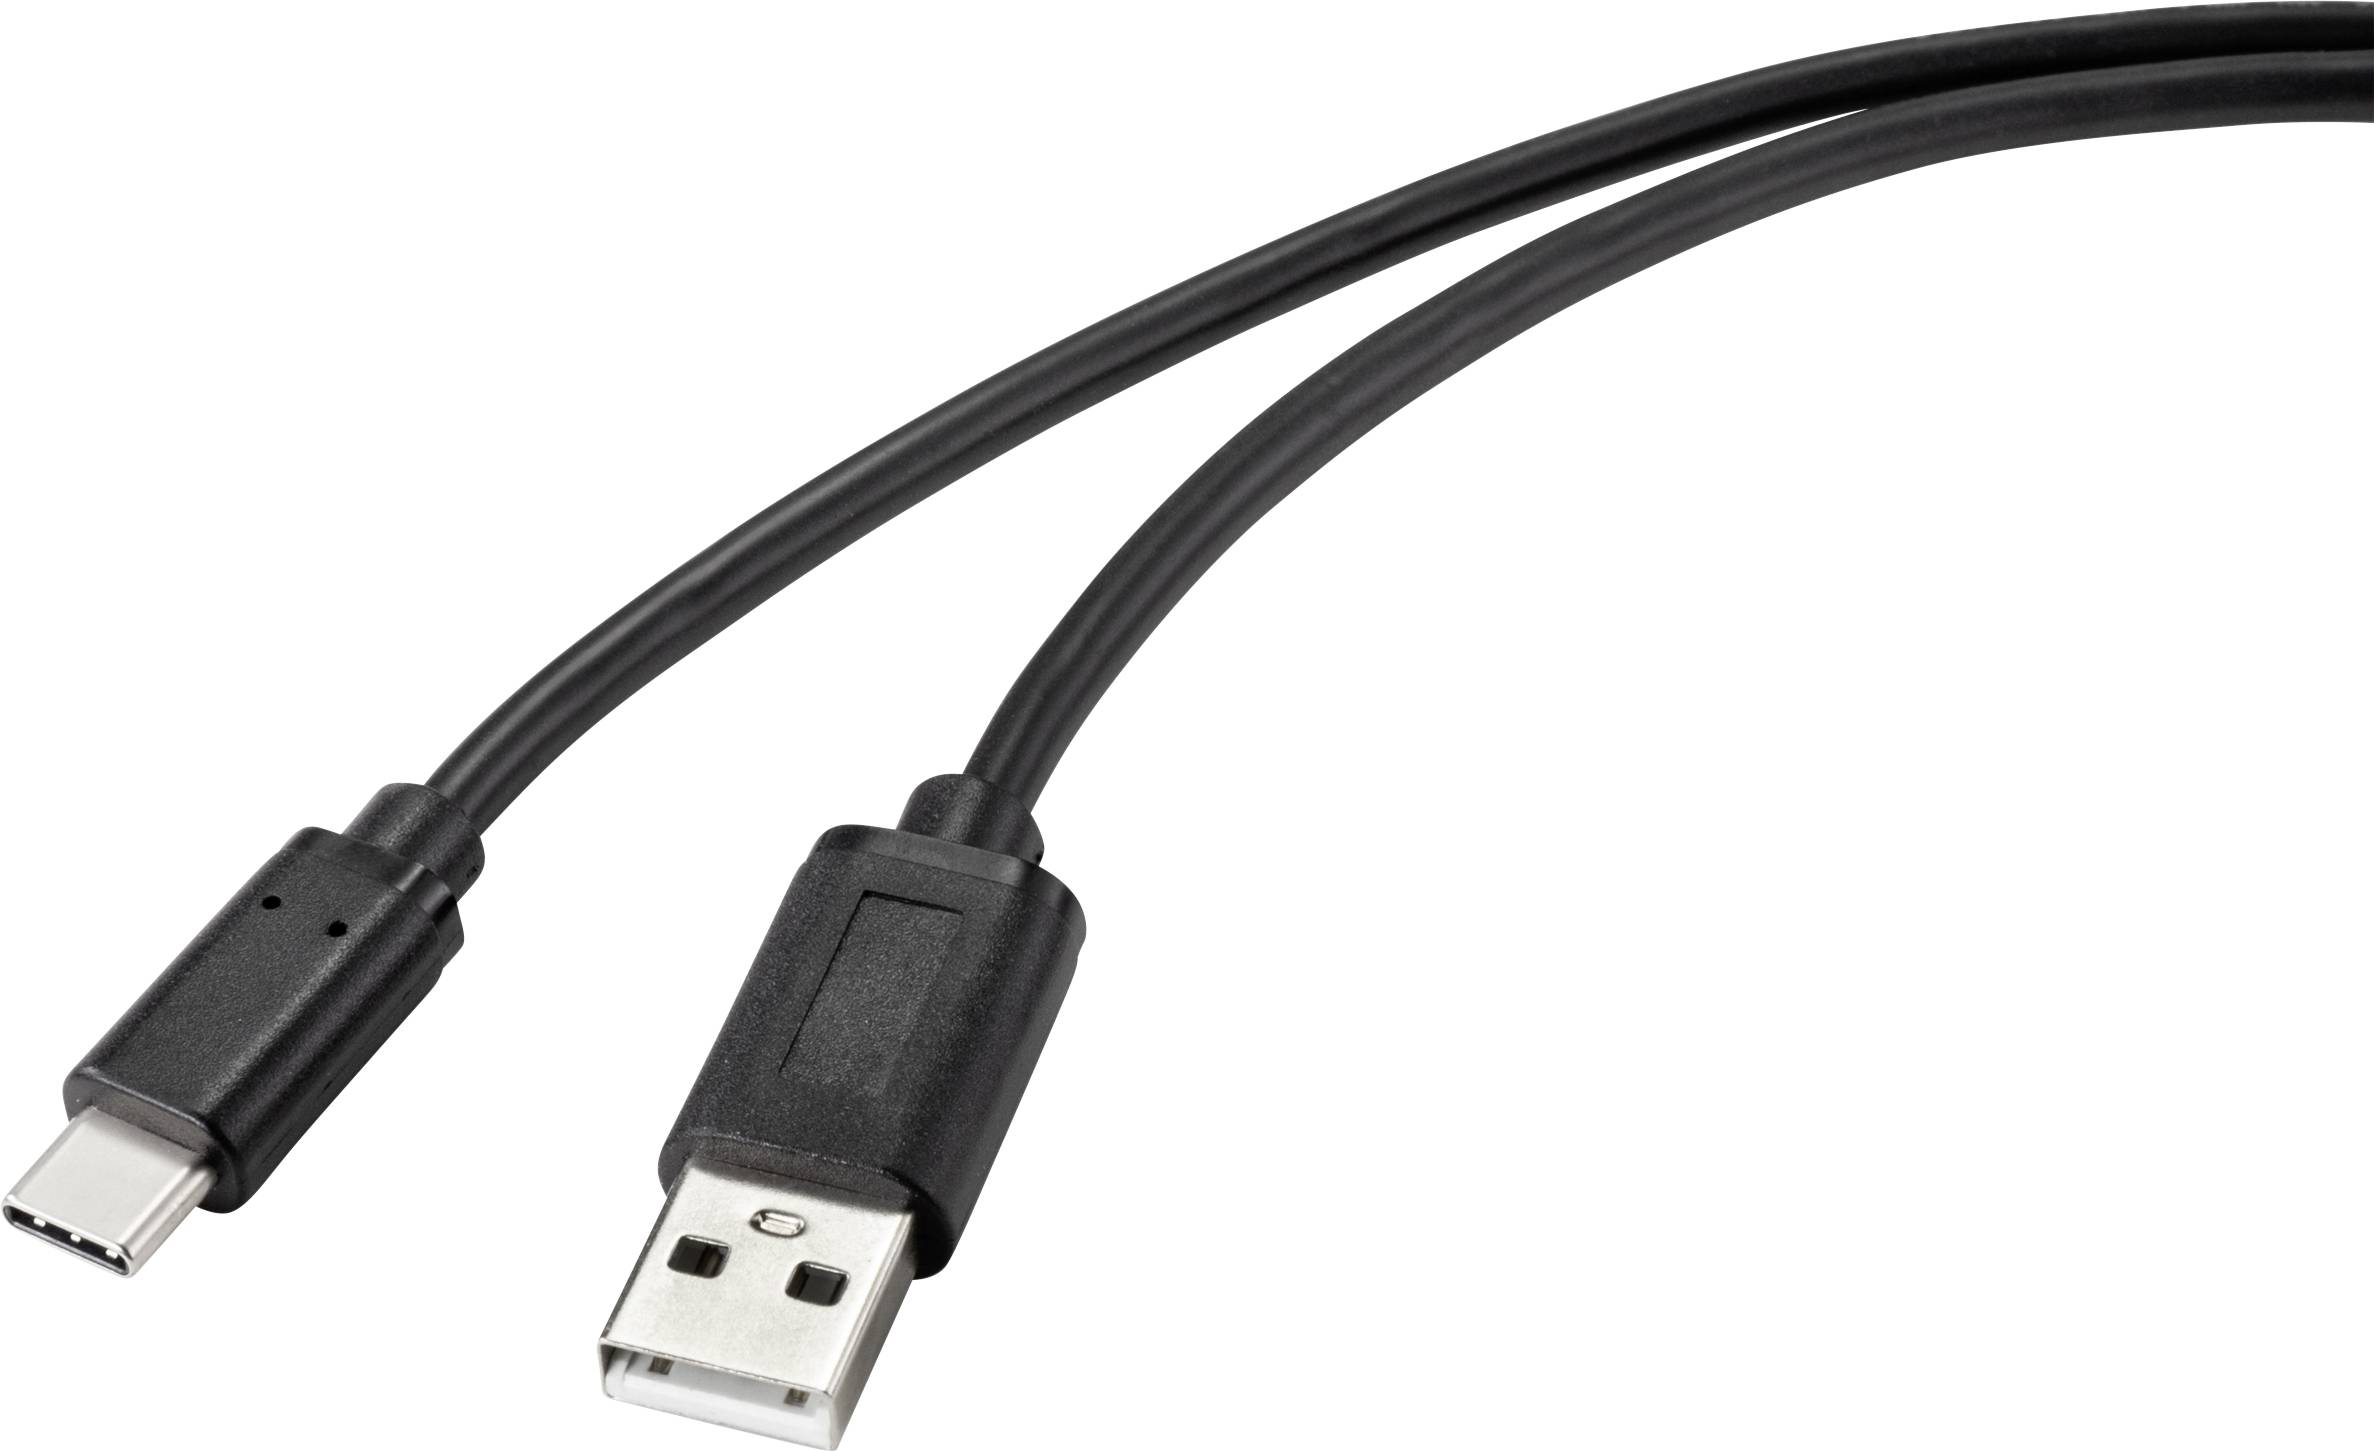 CONRAD Renkforce USB-Kabel USB 2.0 USB-C? Stecker, USB-A Stecker 1.00 m Schwarz mit antimikrobieller